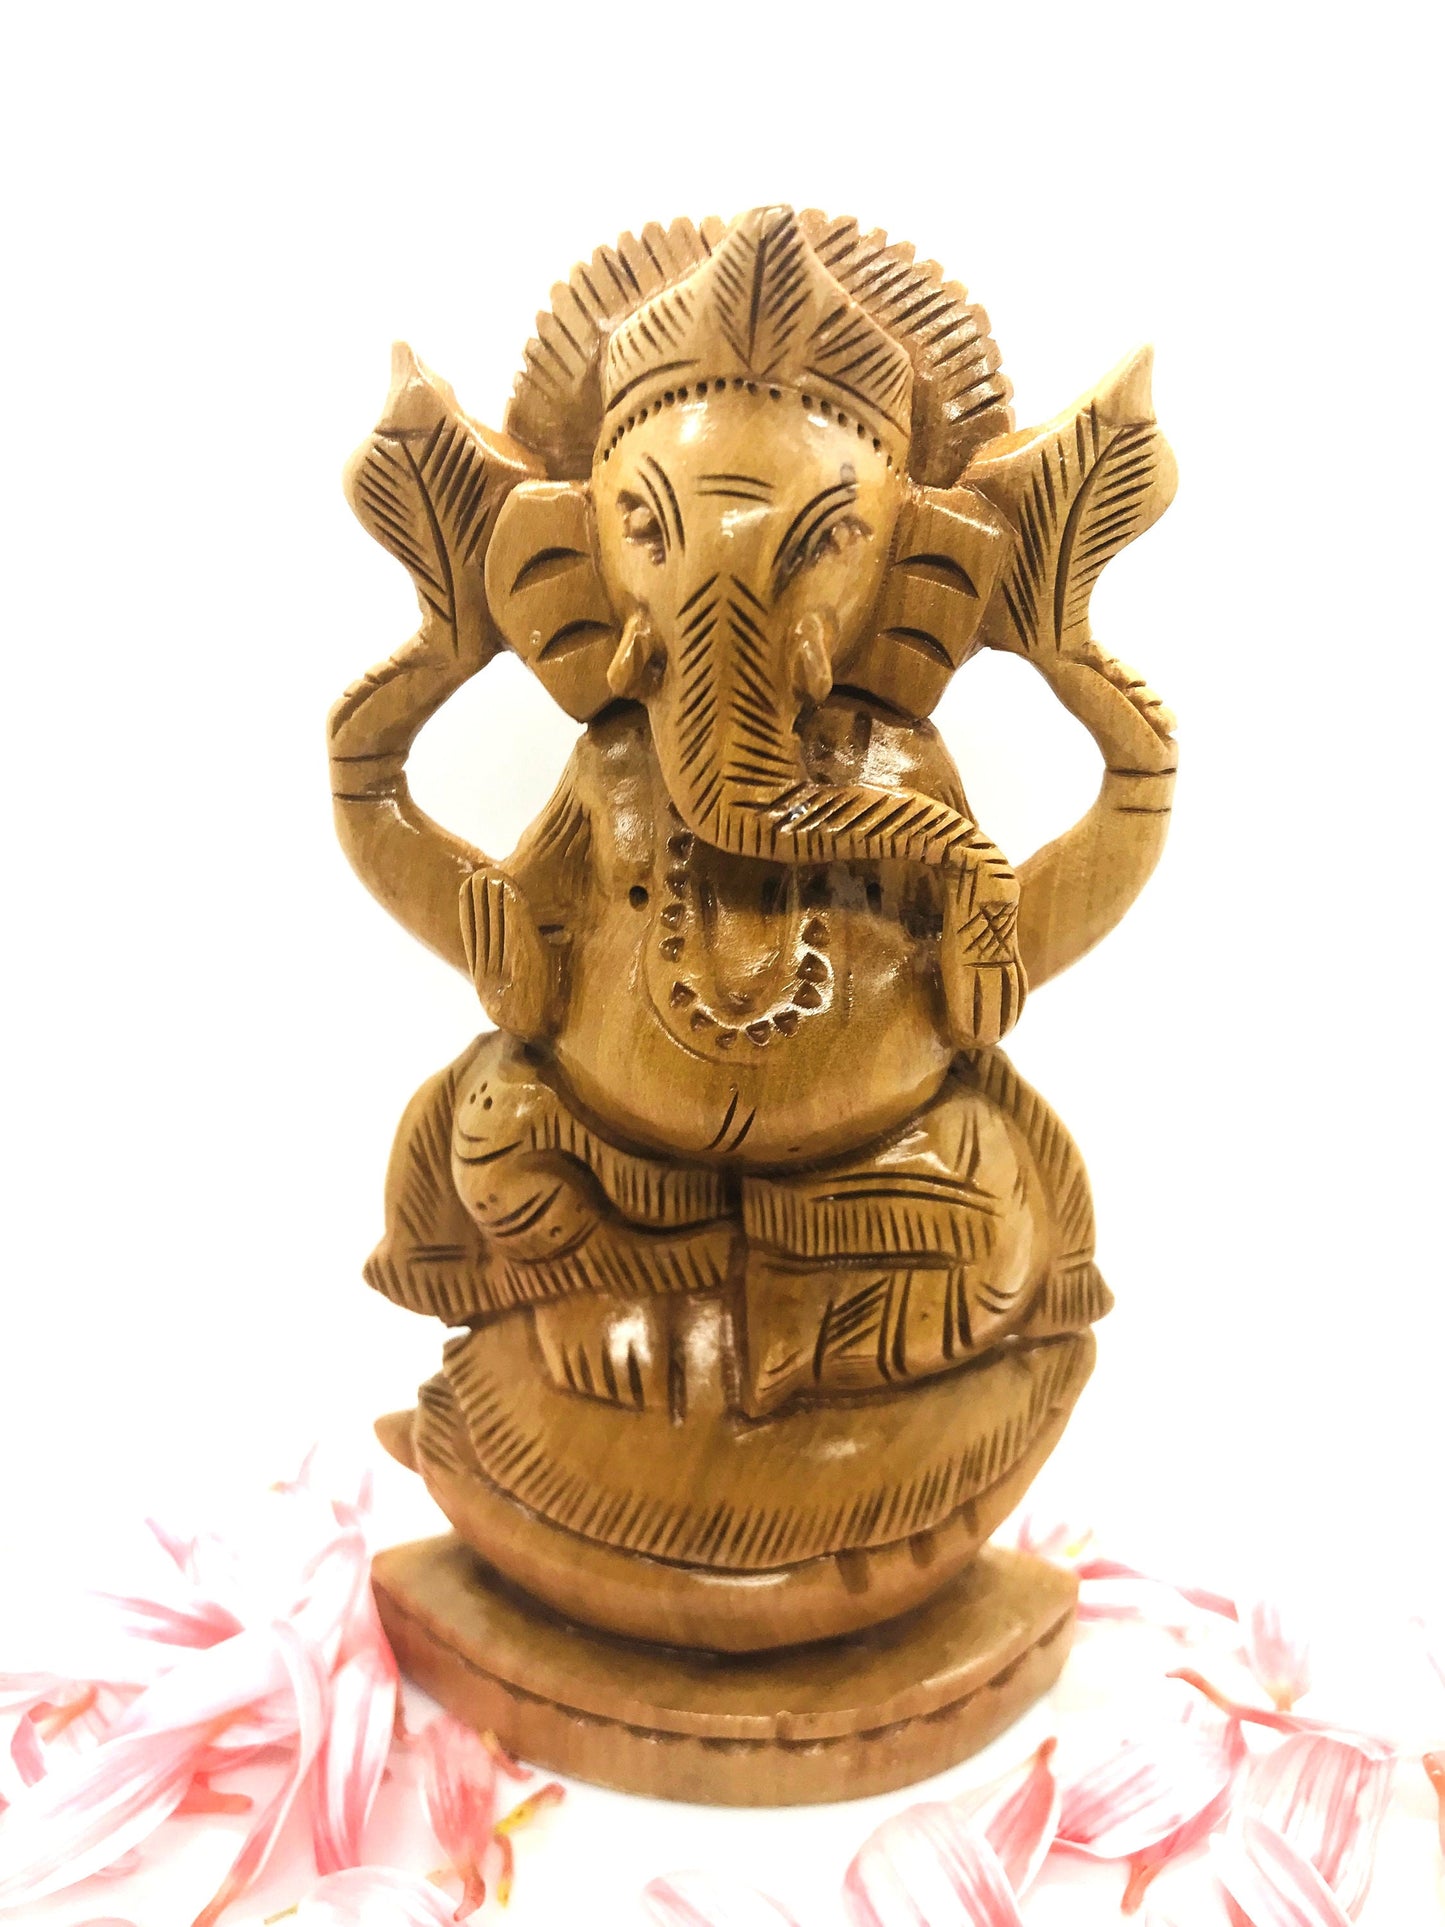 GANESHA Statue - Wooden Ganesh idol - GANPATI wooden hand carved 5 inches statue - Hindu Elephant God GANESH - good luck success prosperity